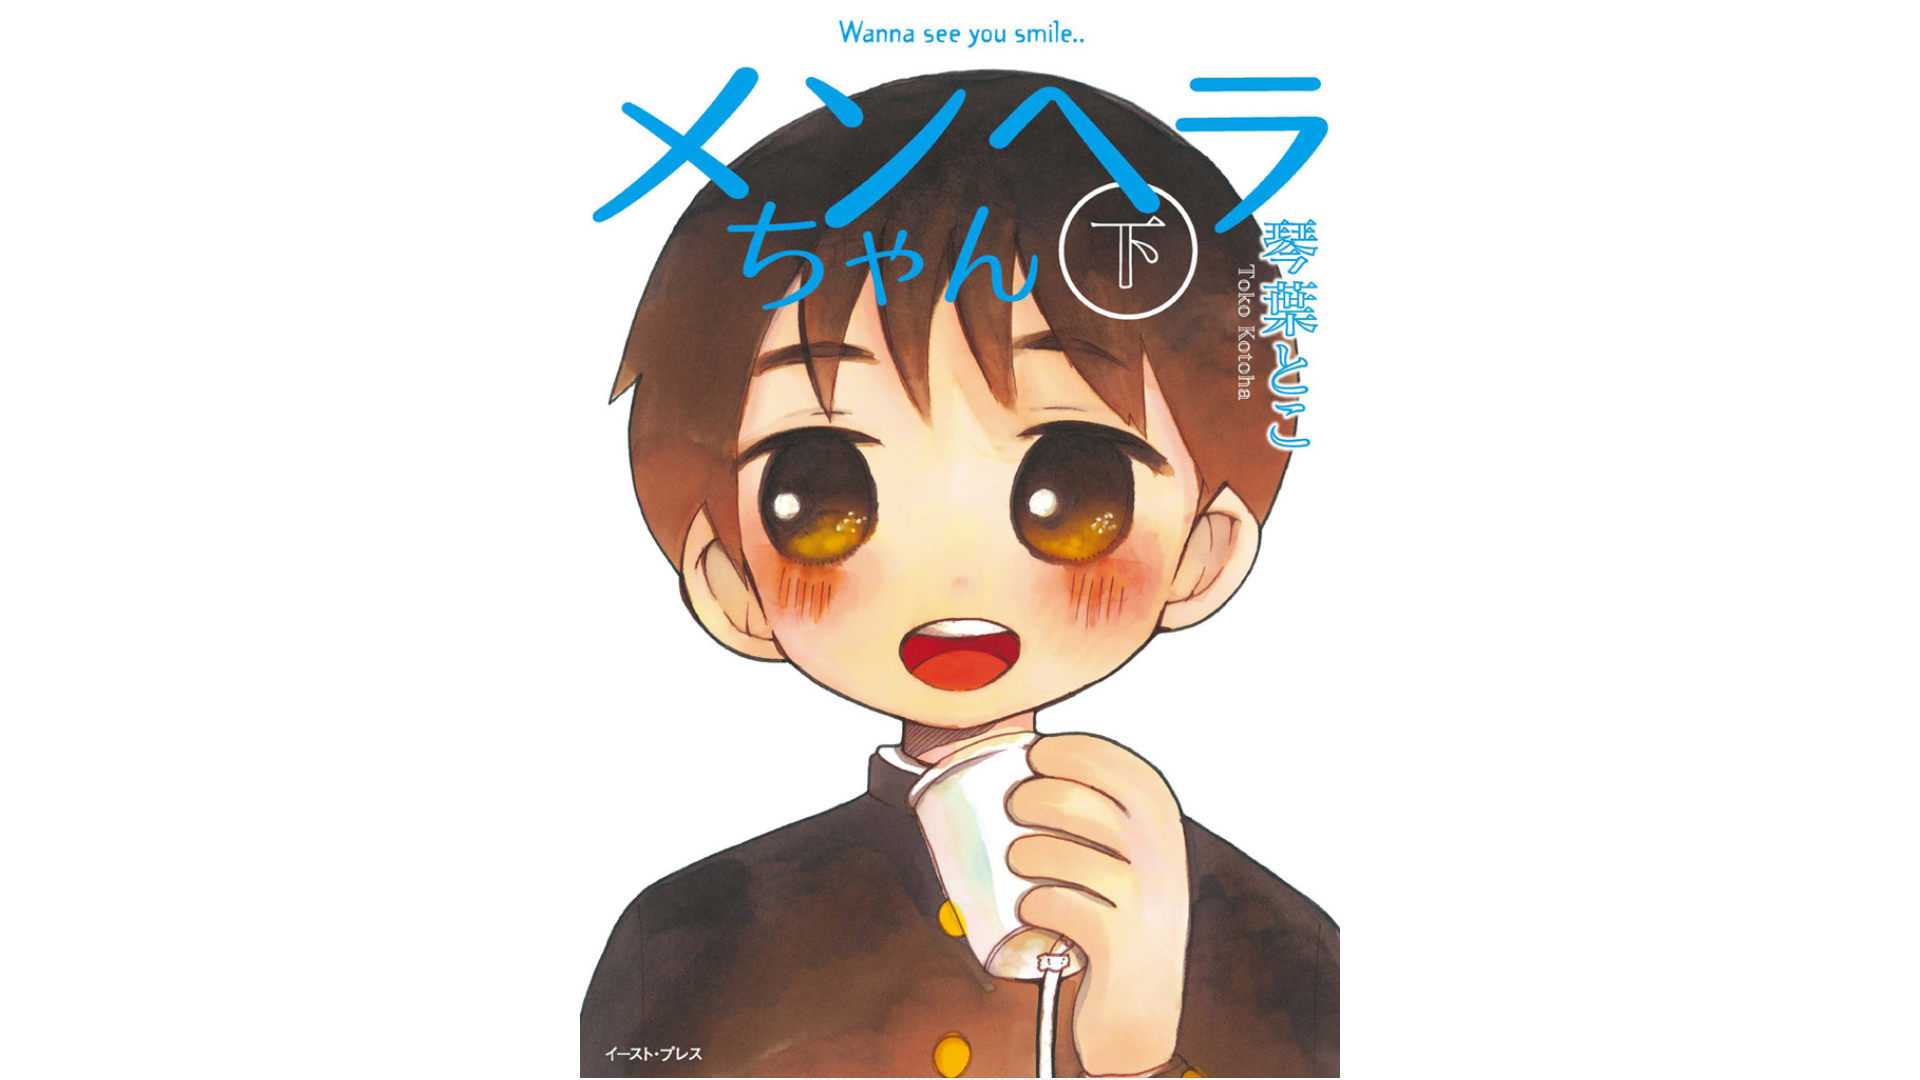 Menhera chan cap 19 (manga) - Mismangas y anime